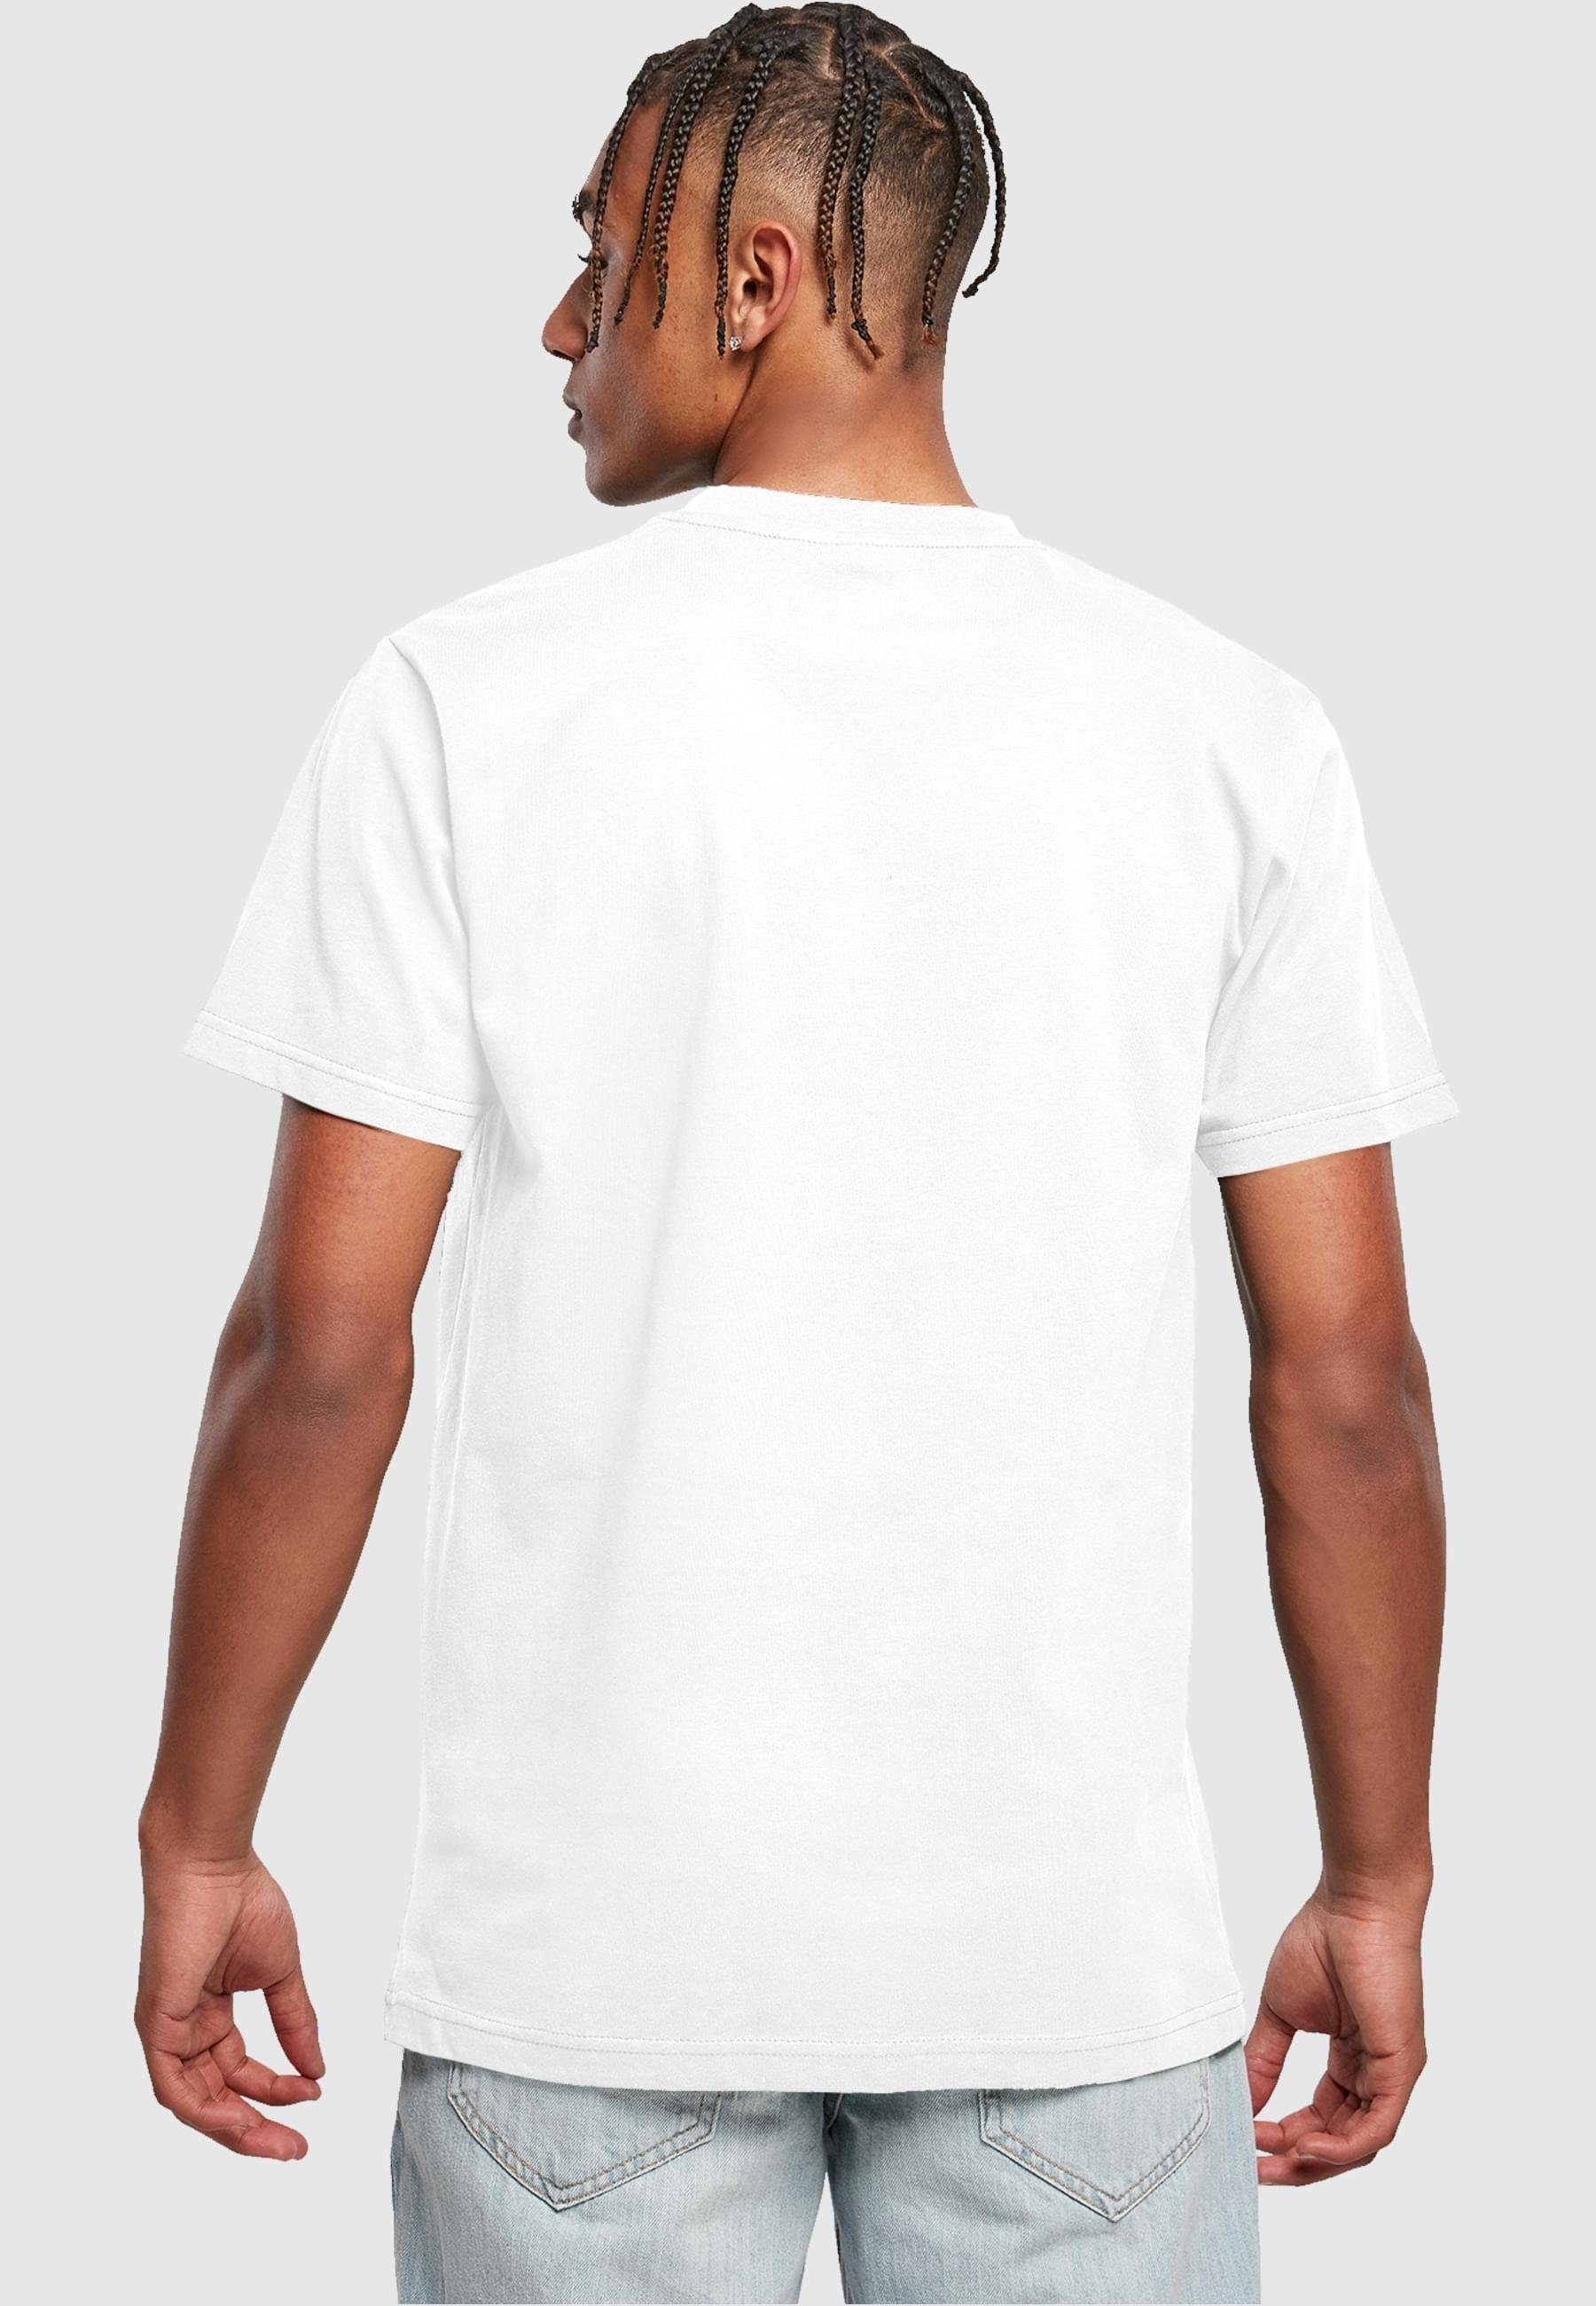 LA LAYLA (1-tlg) LA Merchcode T-Shirt white T-Shirt Herren